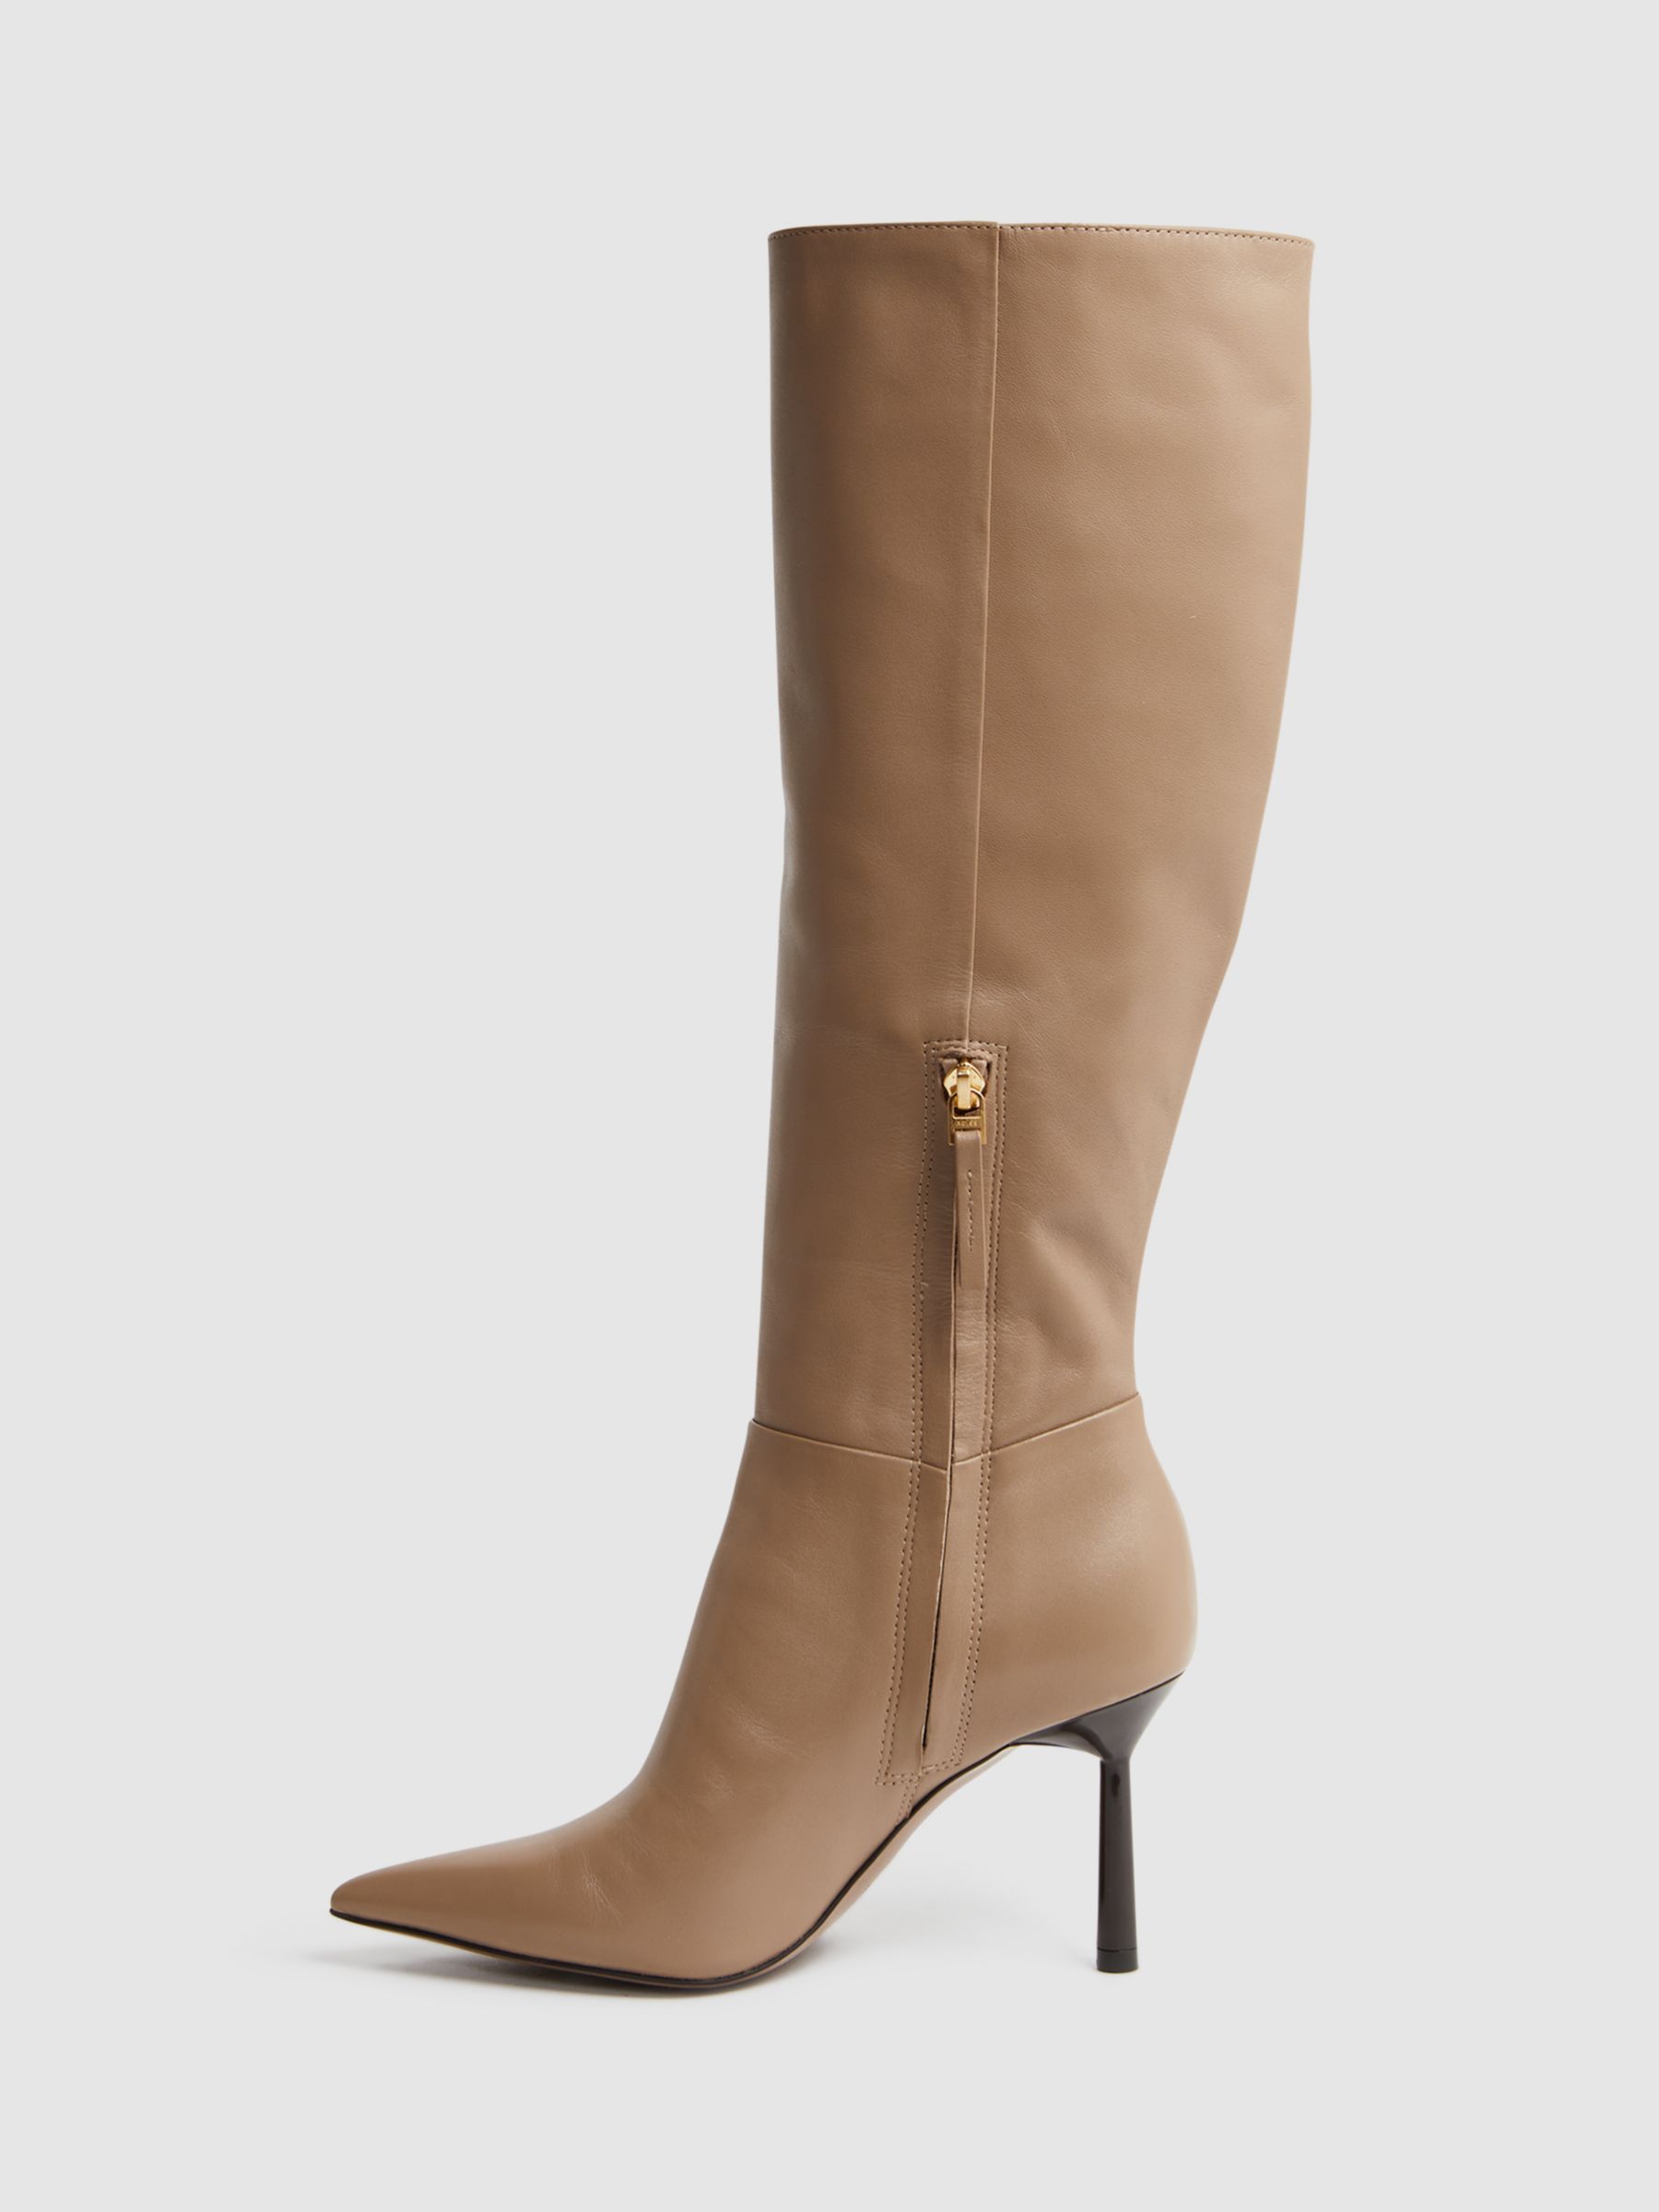 Reiss Gracyn High Heel Leather Knee High Boots, Camel, 6